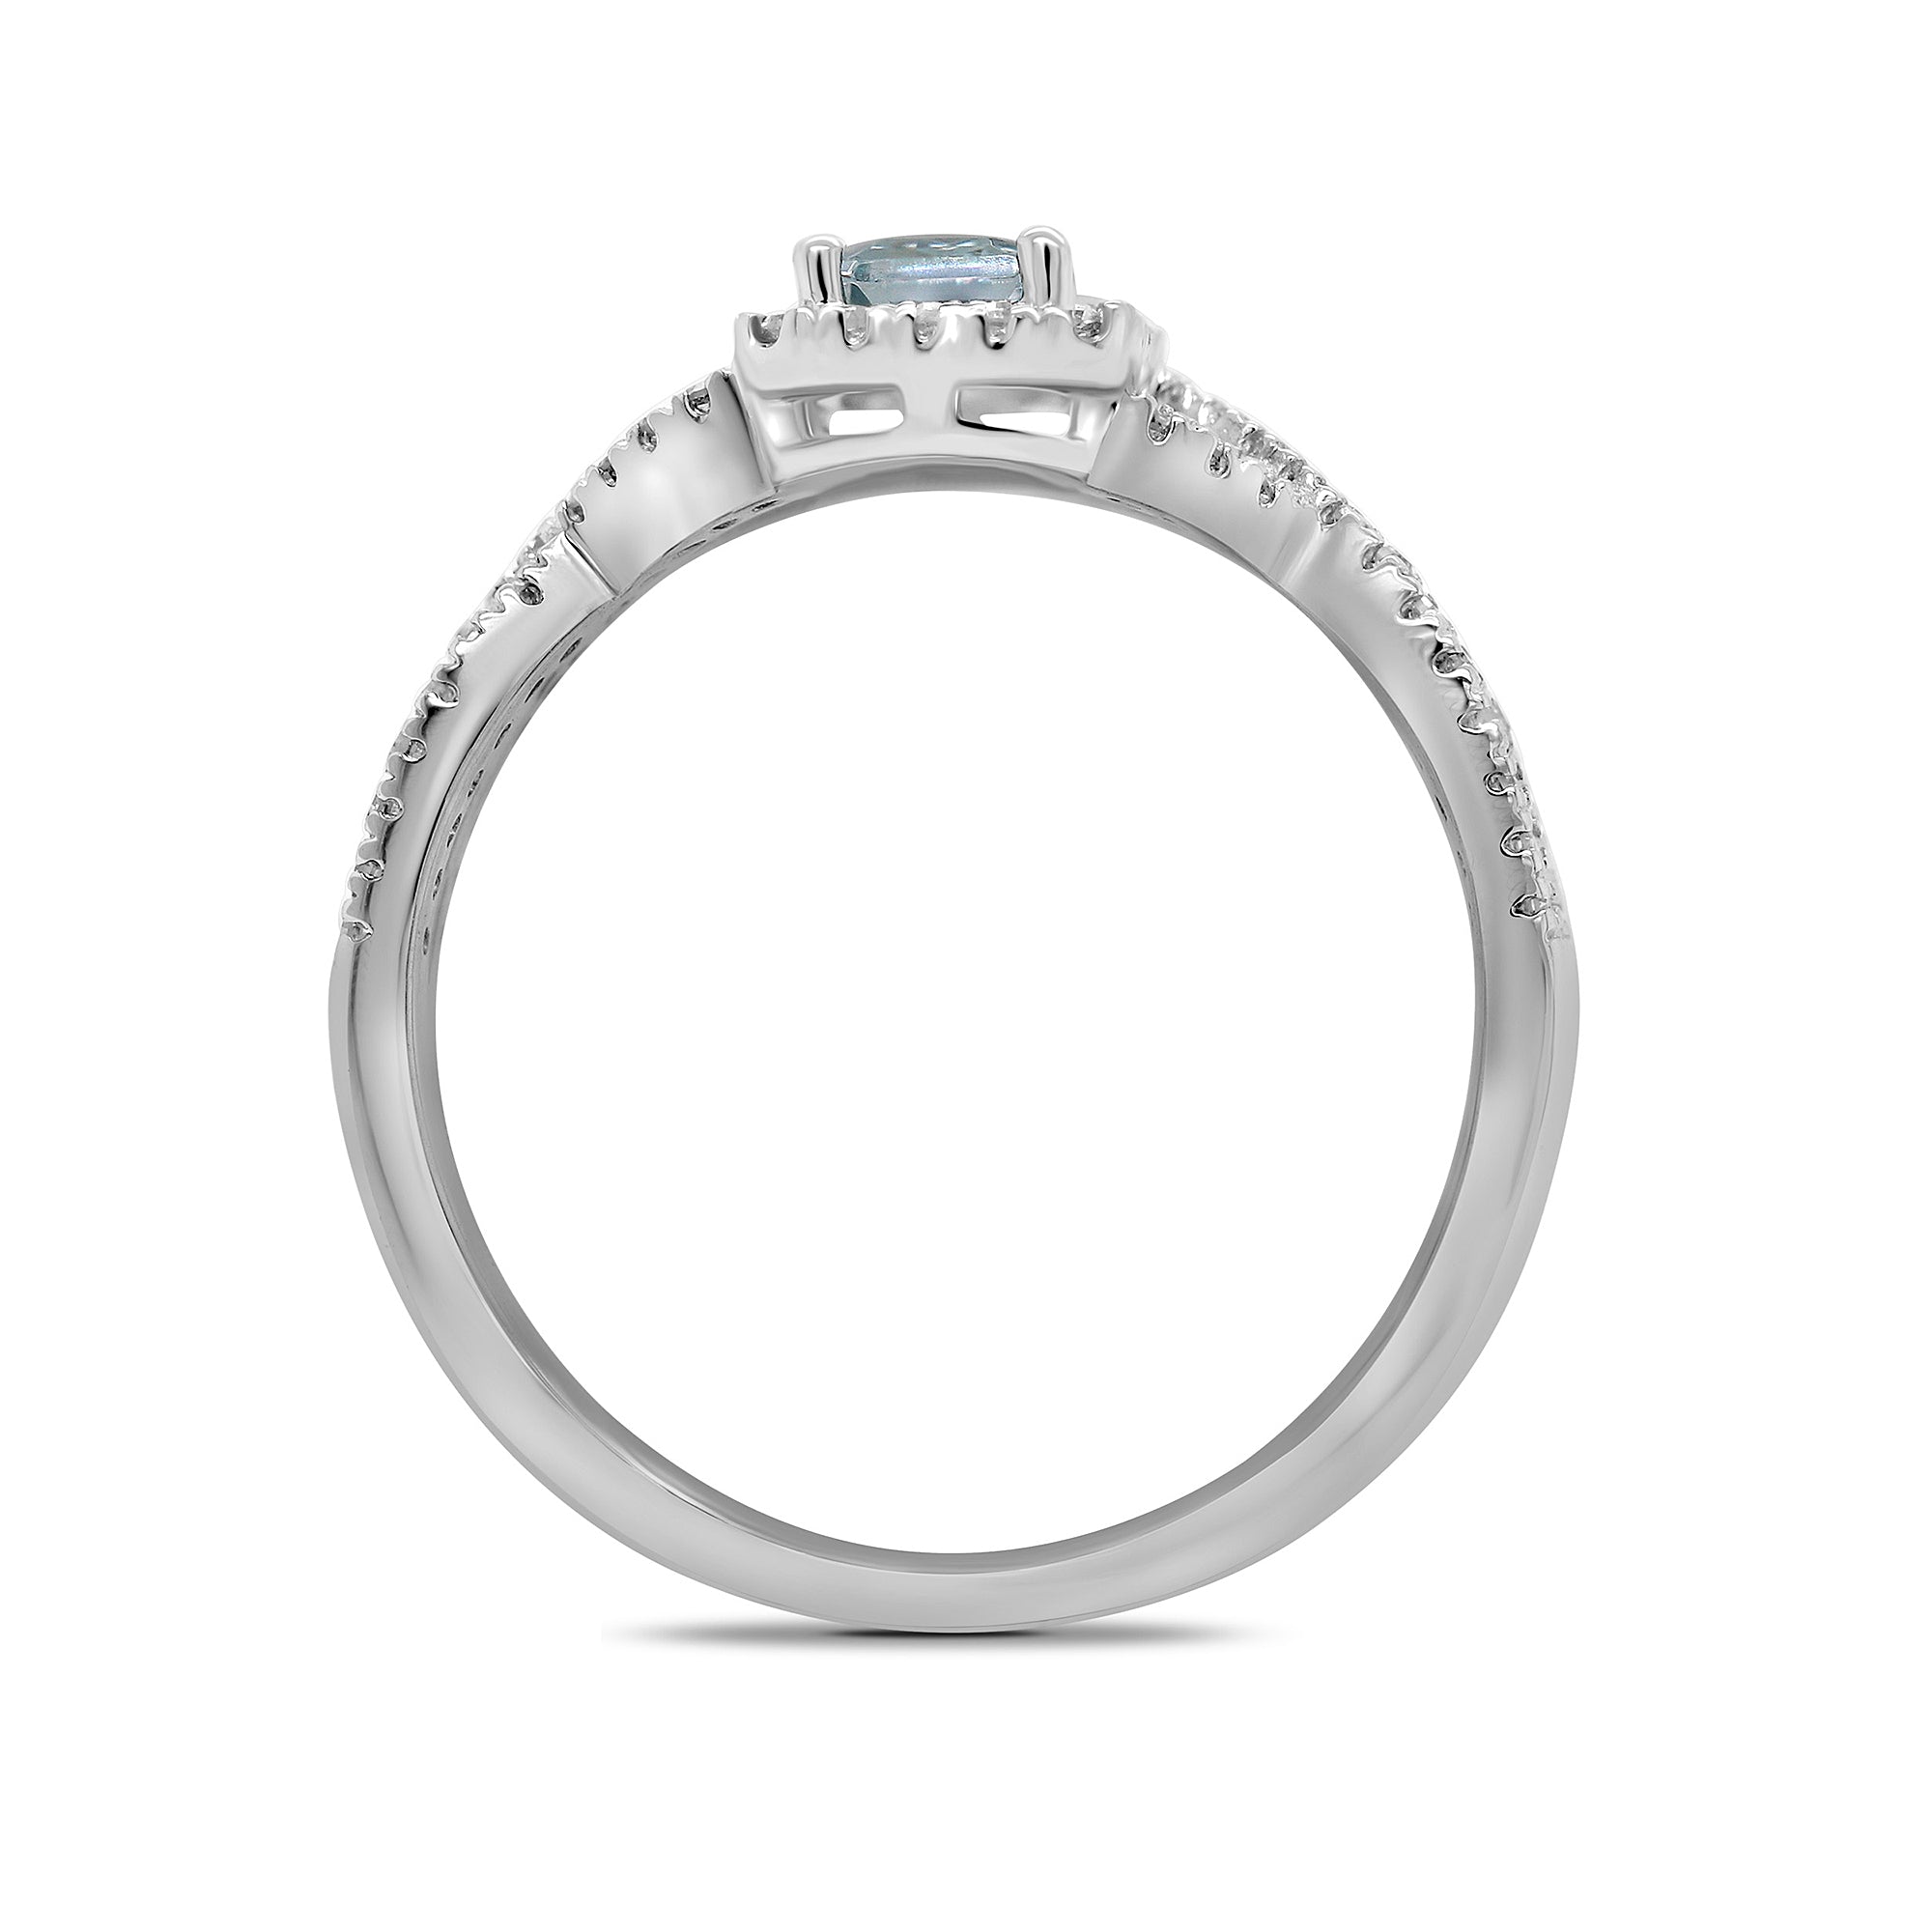 9ct white gold 6x4mm octagon cut aquamarine & diamond set crossover shank cluster ring 0.21ct